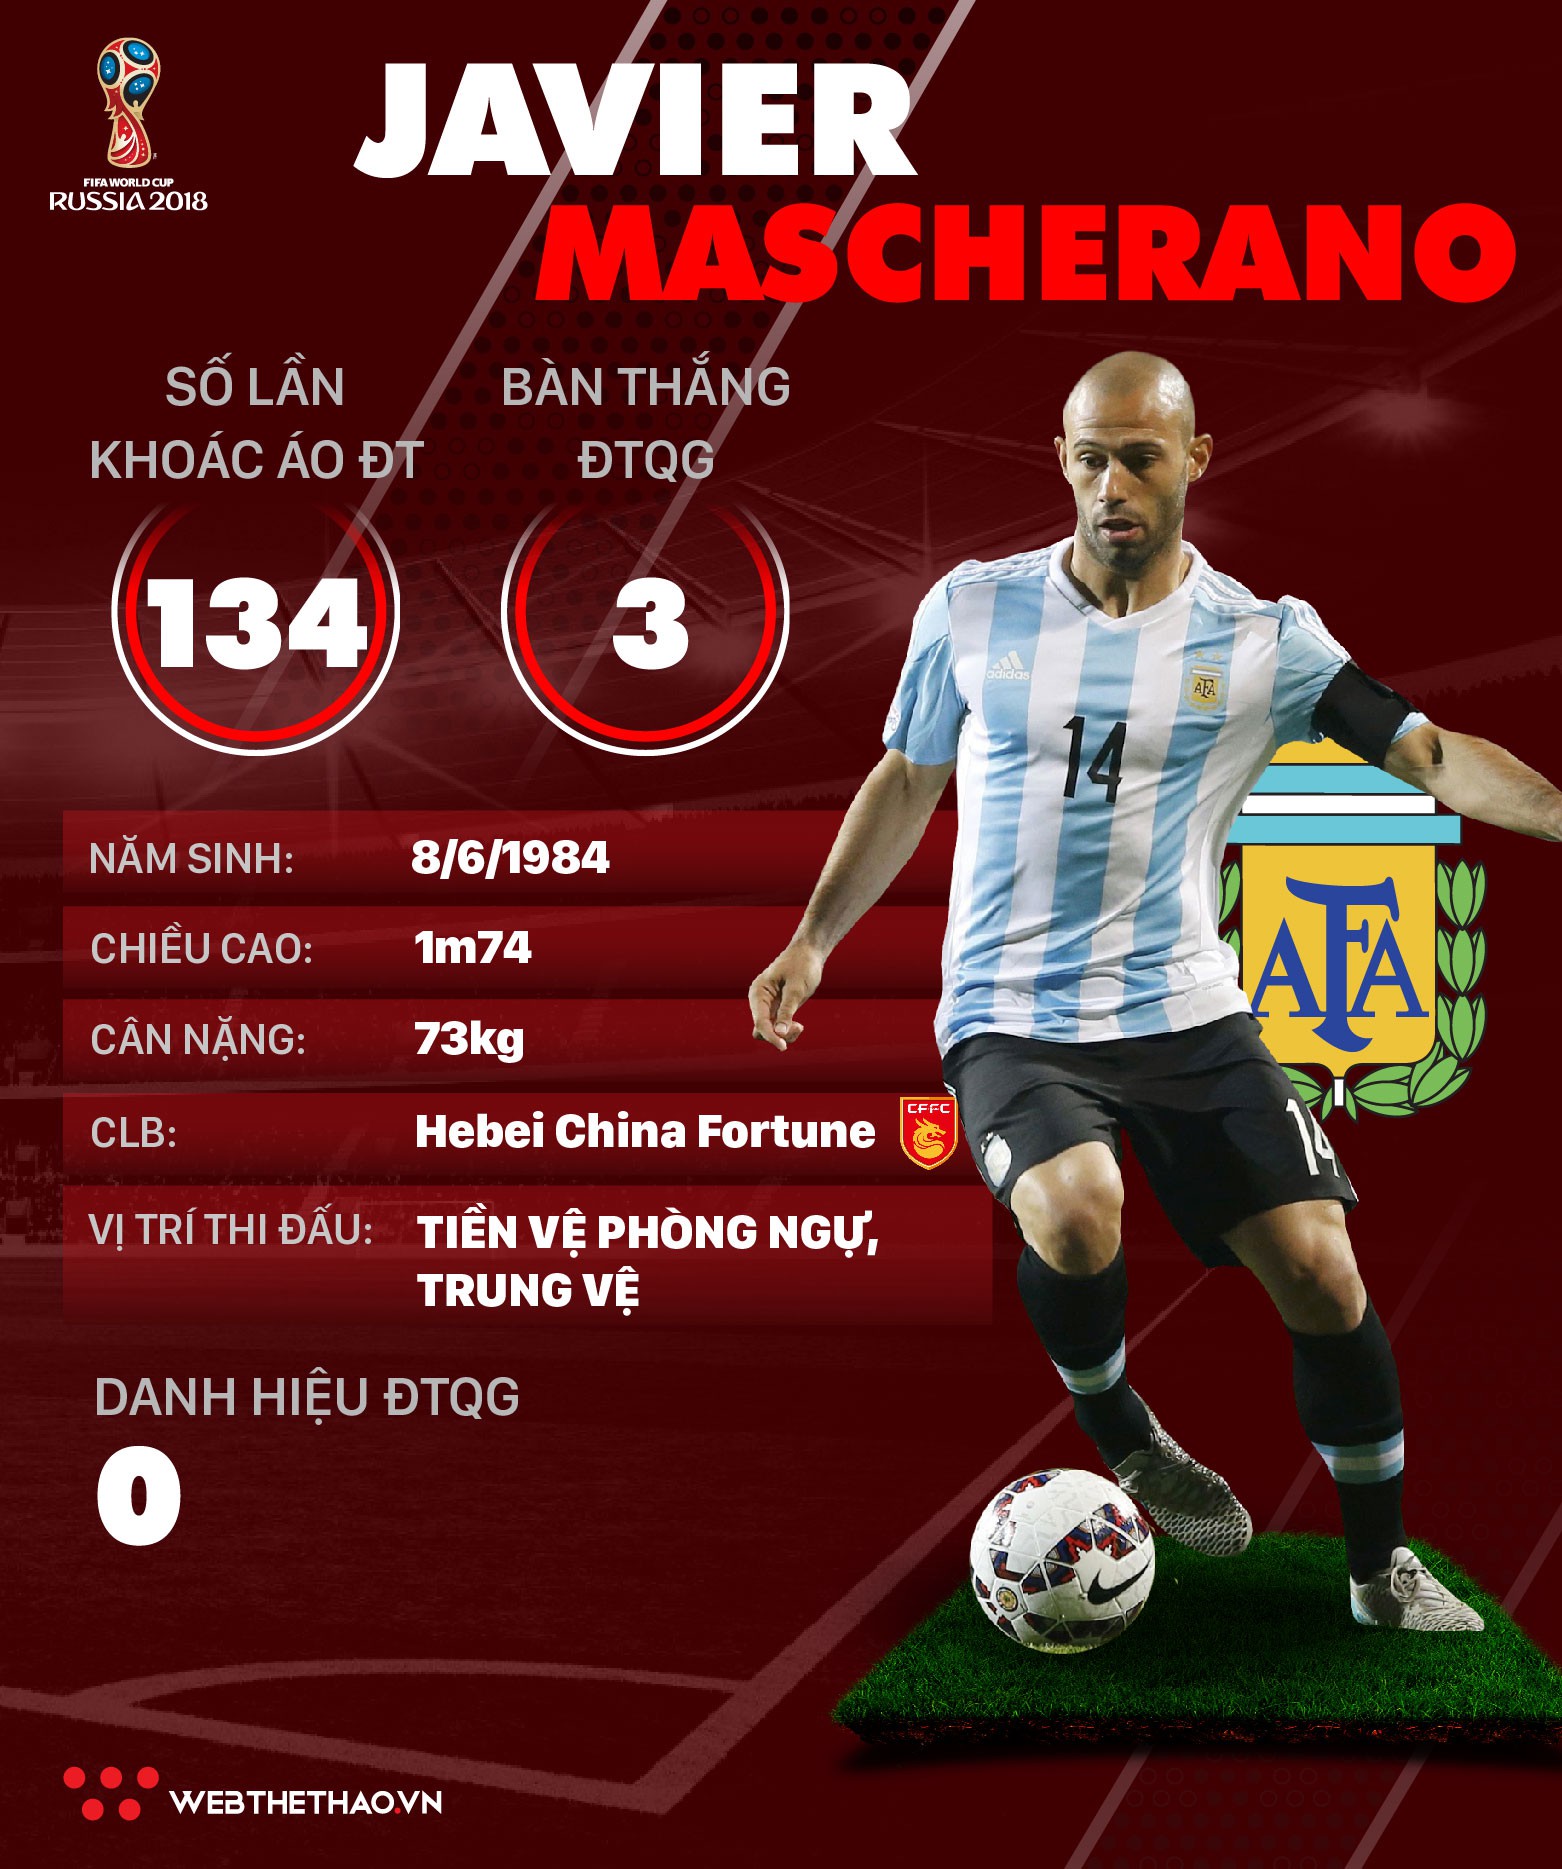 Thông tin cầu thủ Javier Mascherano của ĐT Argentina dự World Cup 2018